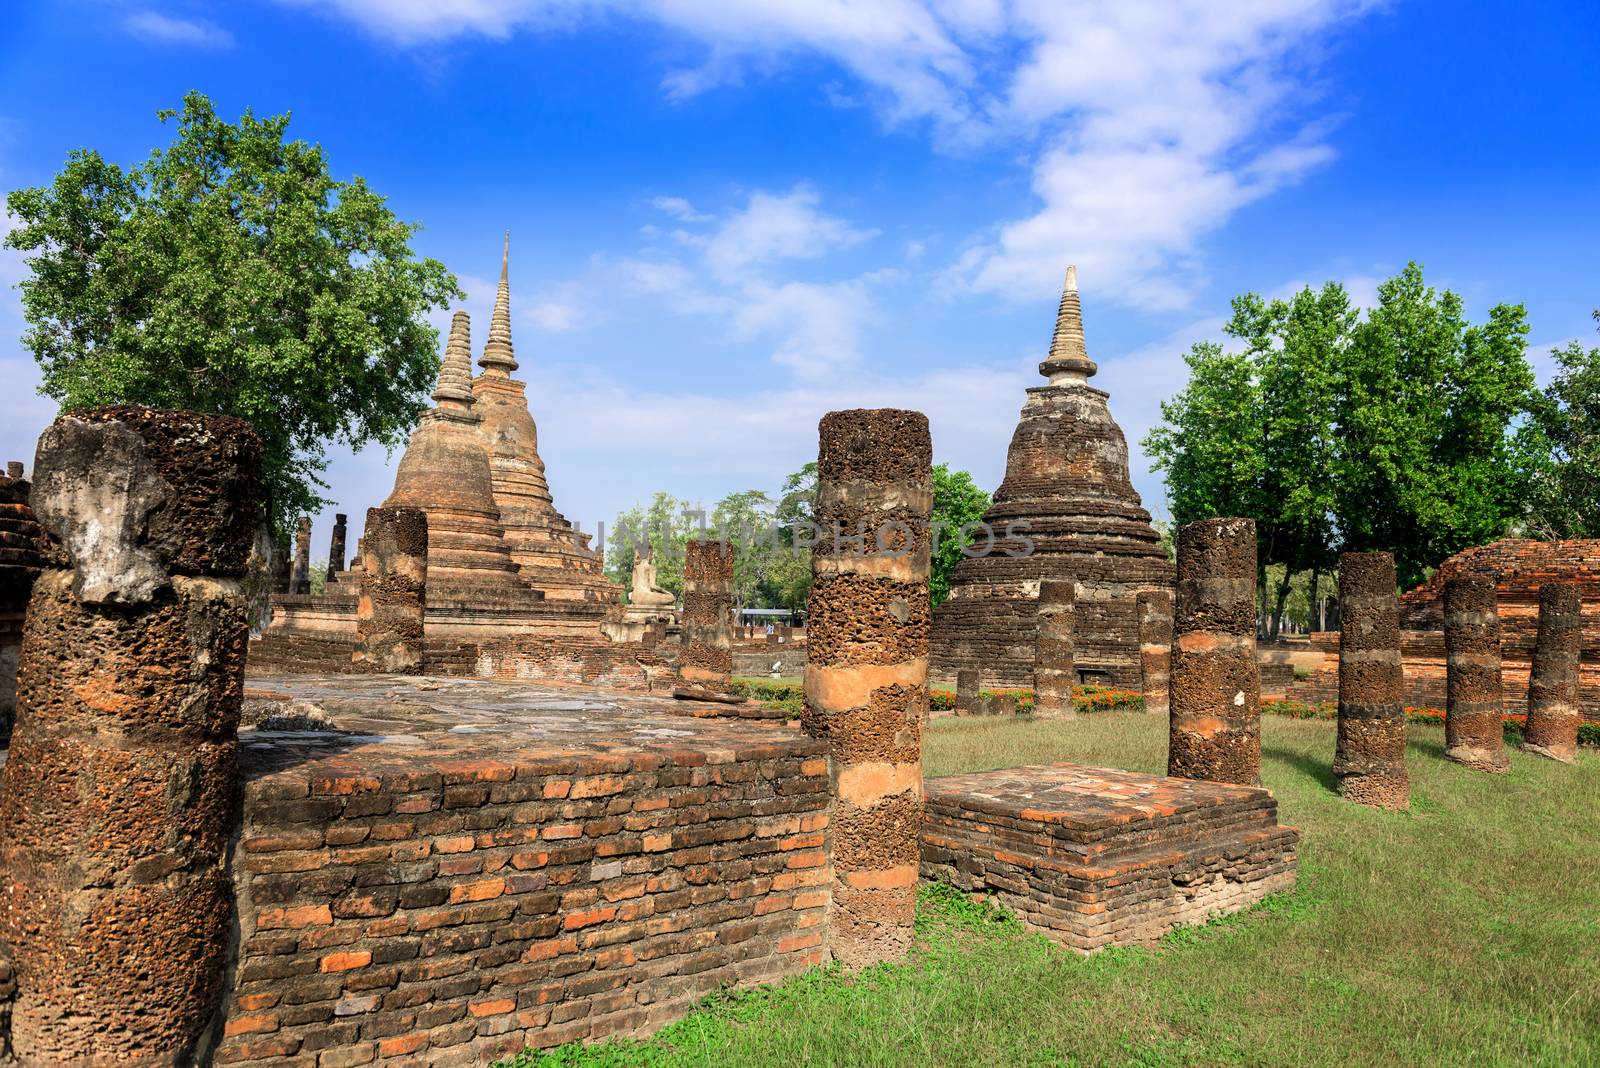 Wat Mahathat at Sukhothai historical park in Sukhothai, Thailand.